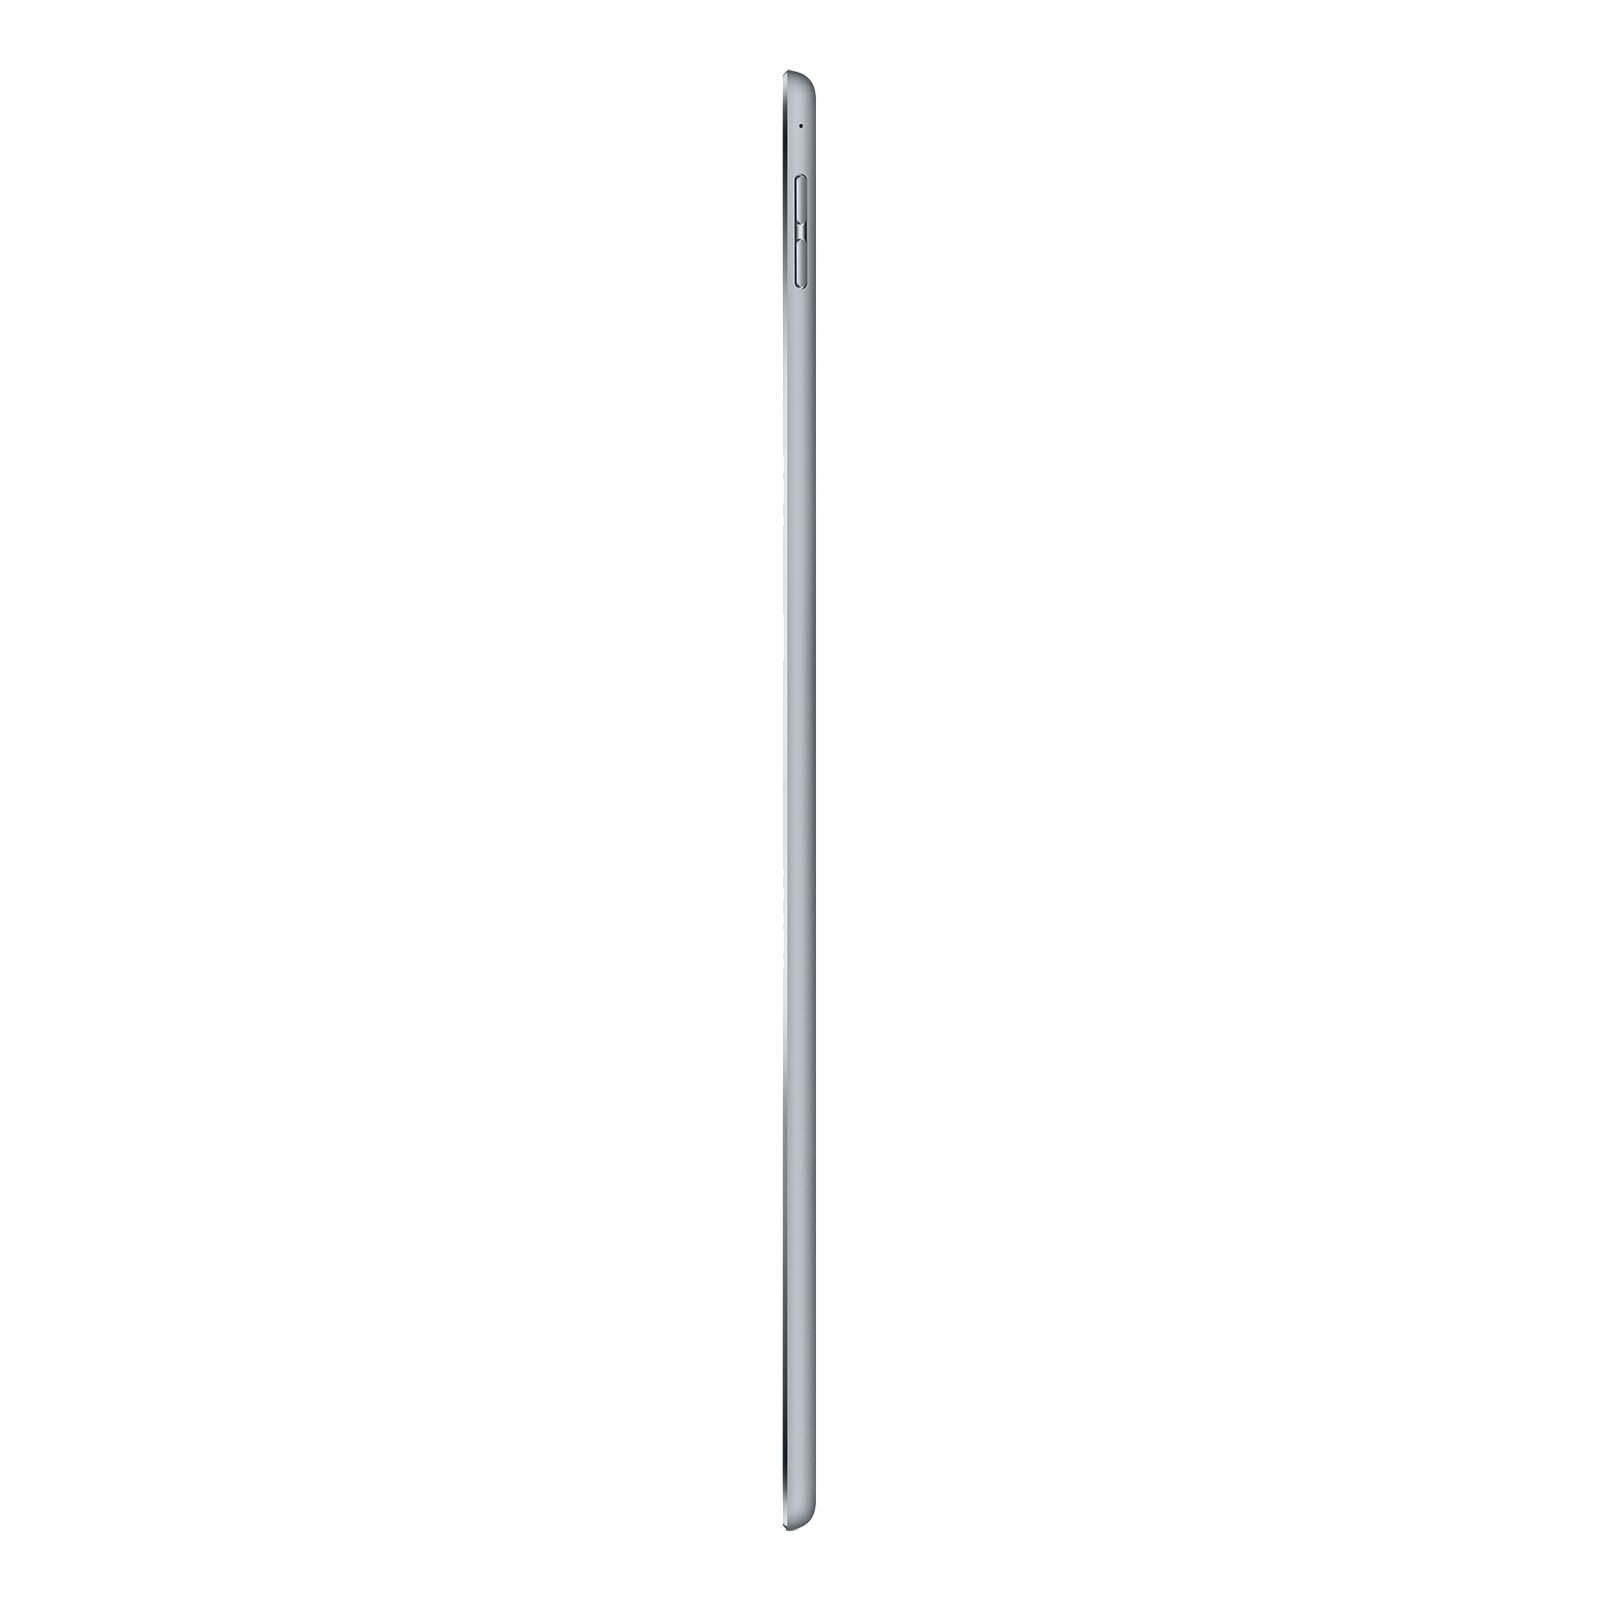 iPad Pro 12.9 Inch 2nd Gen 256GB Space Grey Good - Unlocked